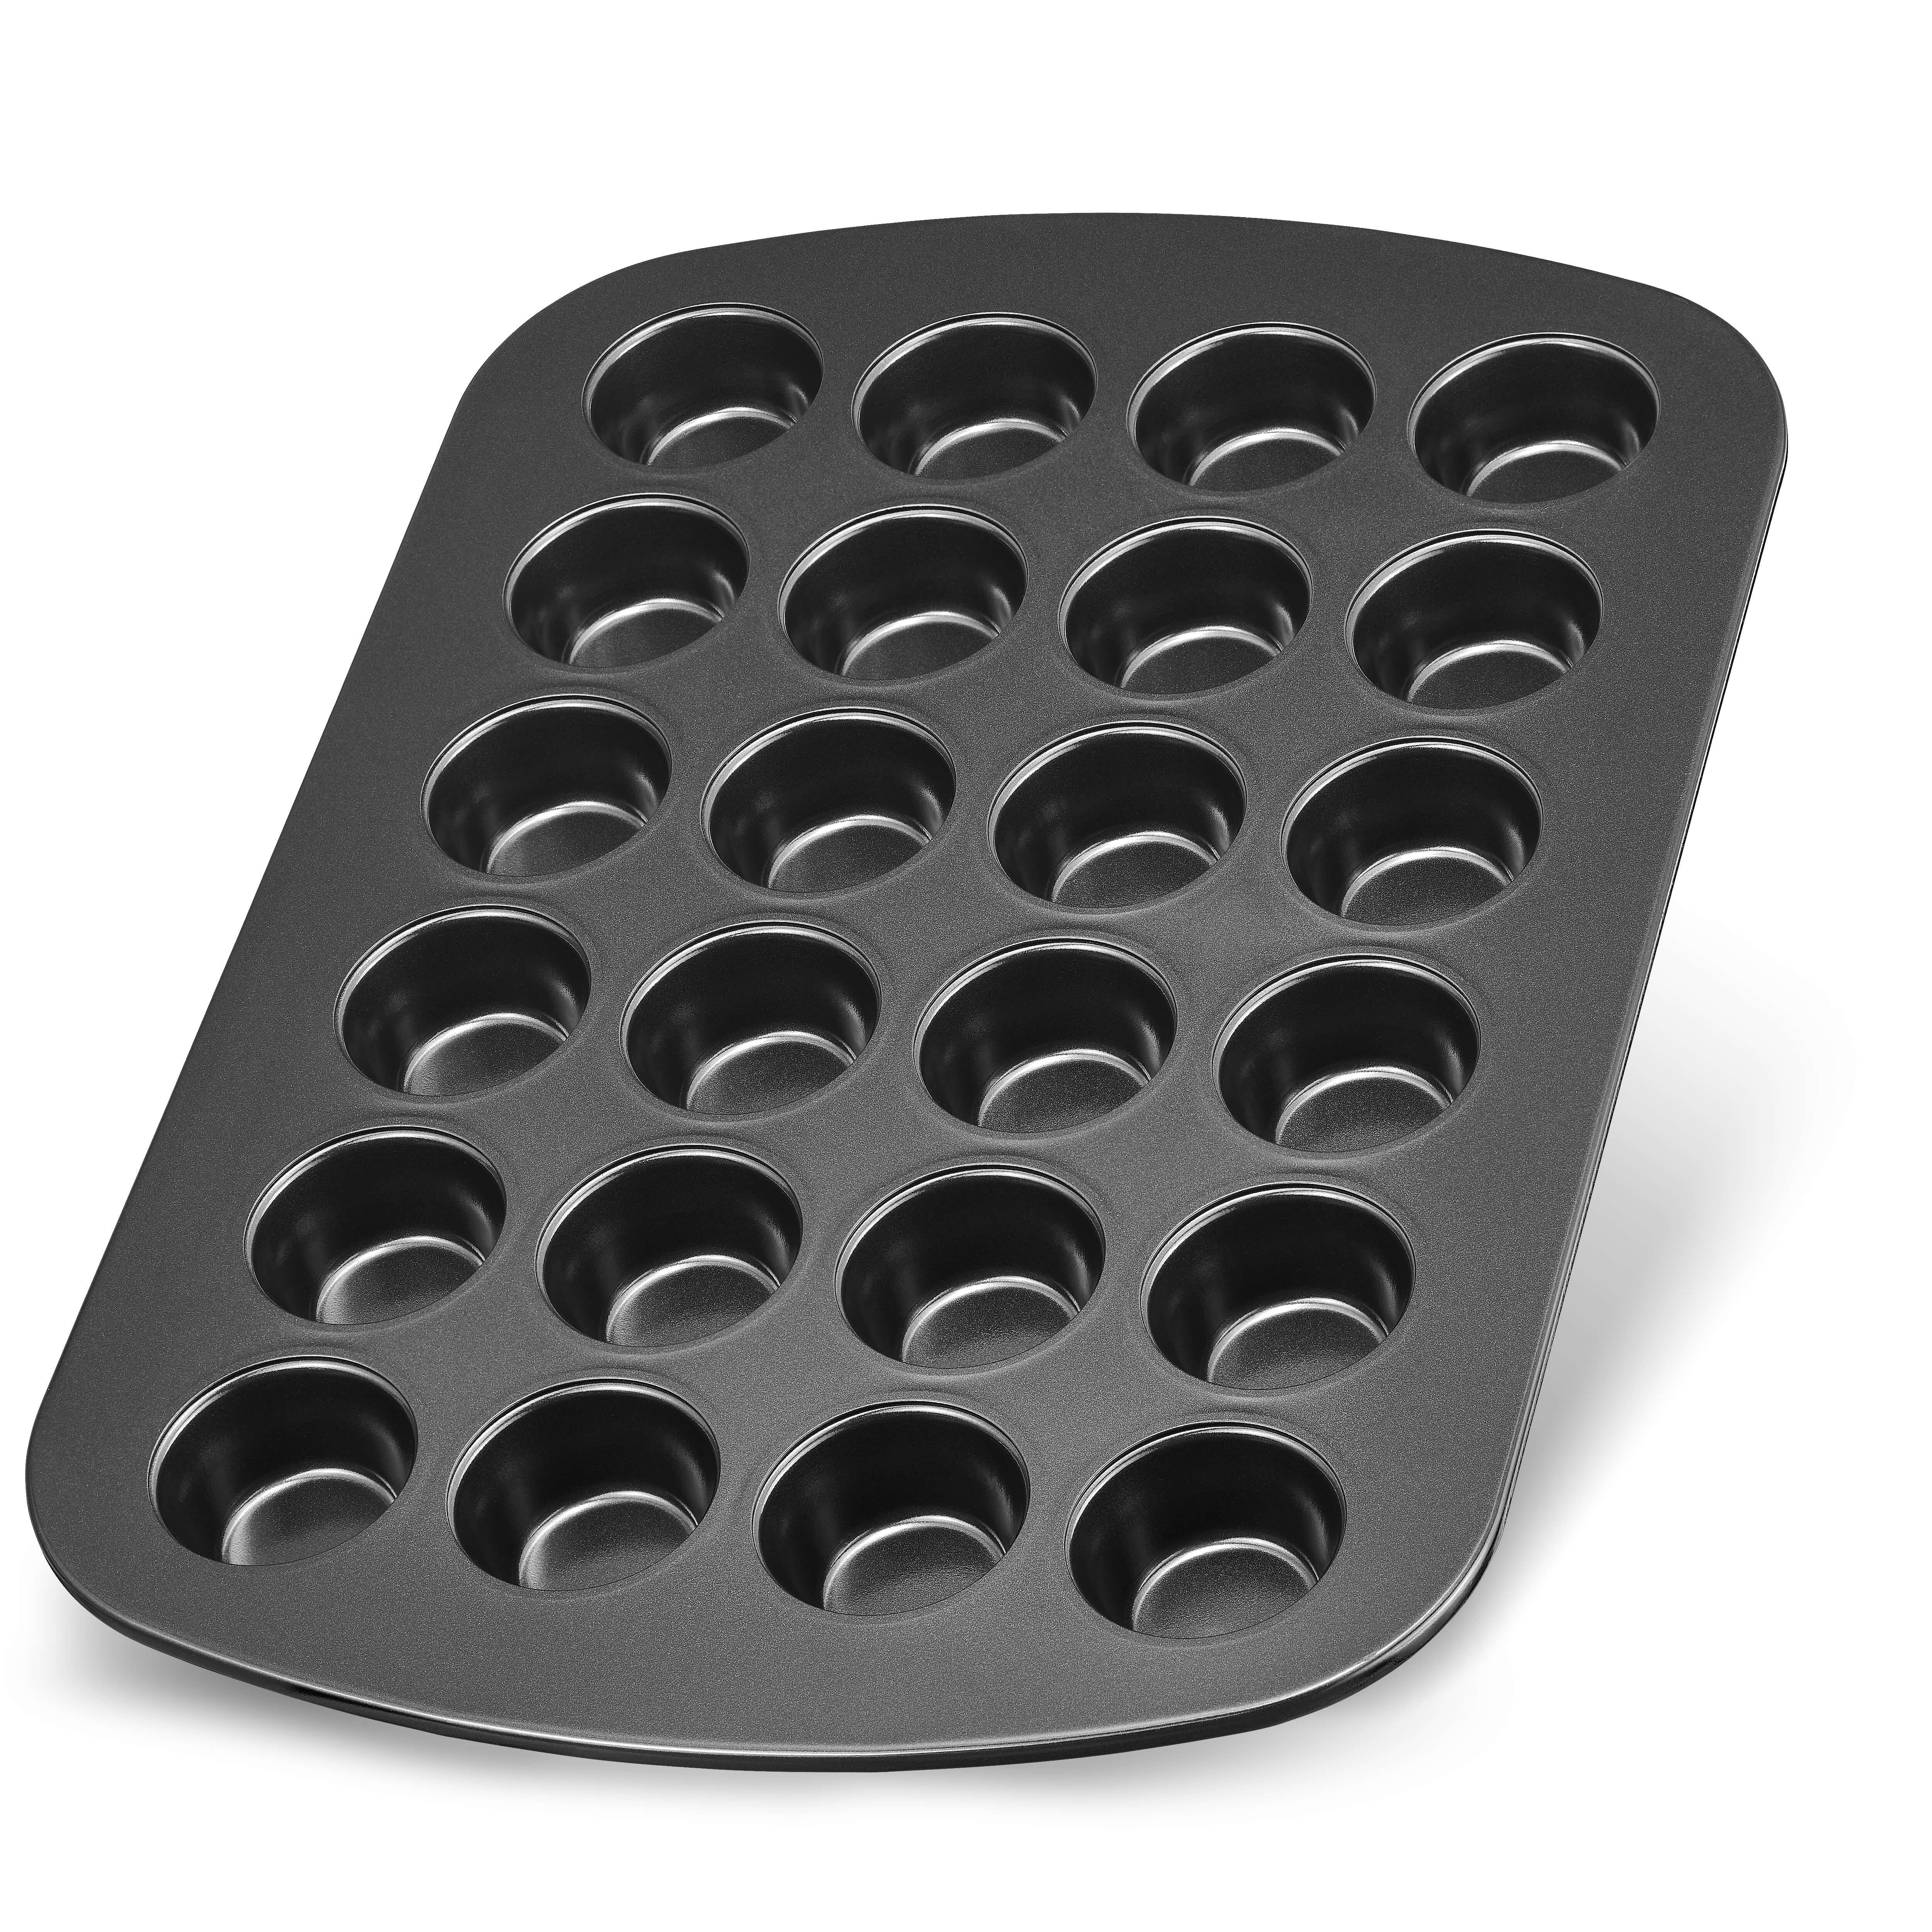 LINFELDT Muffinform hochwertig beschichtete Backform für 24 Mini - Muffins